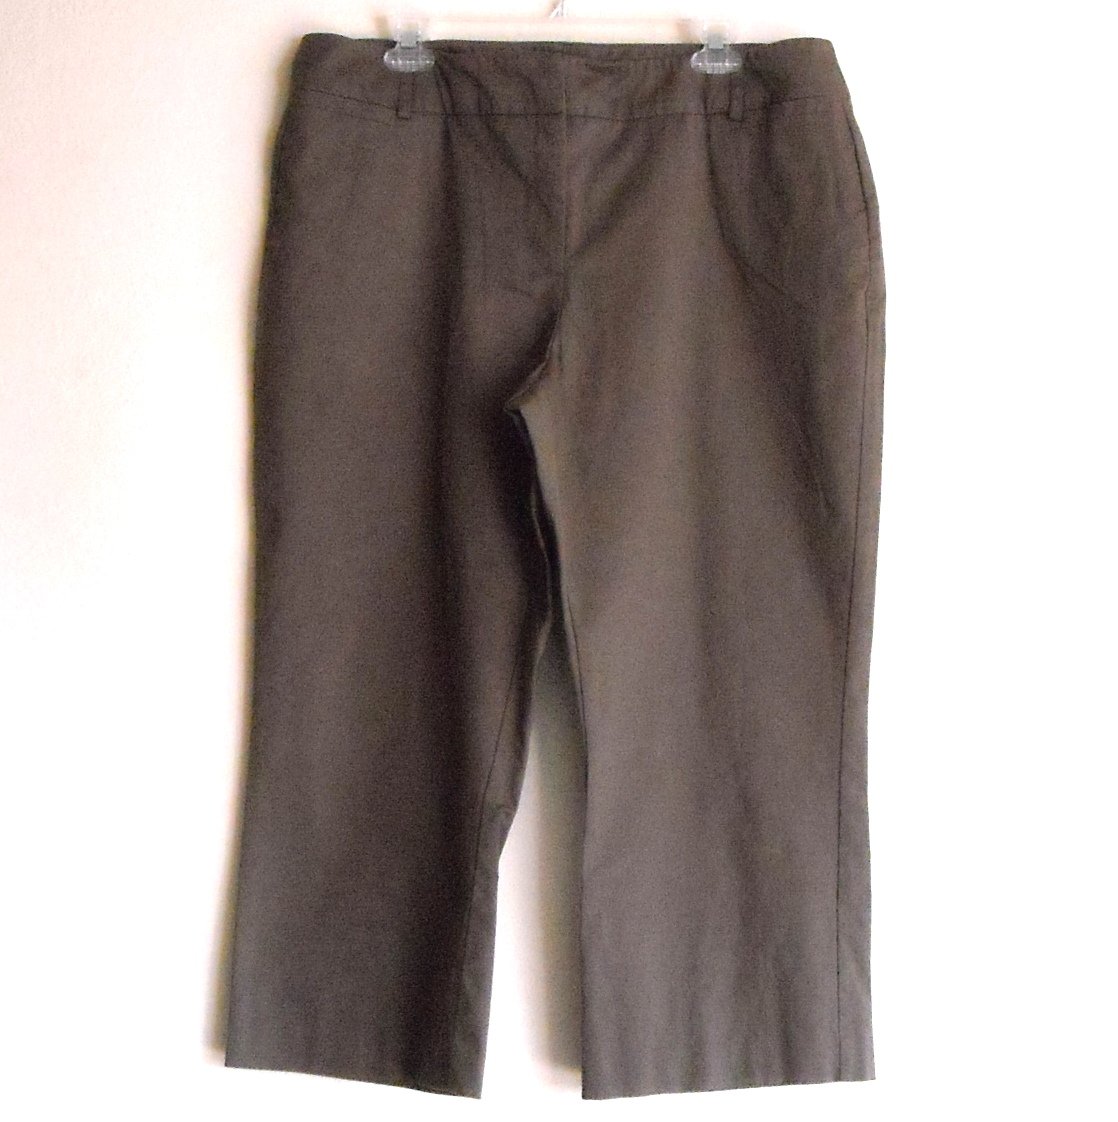 Pantology womens brown pants size 16